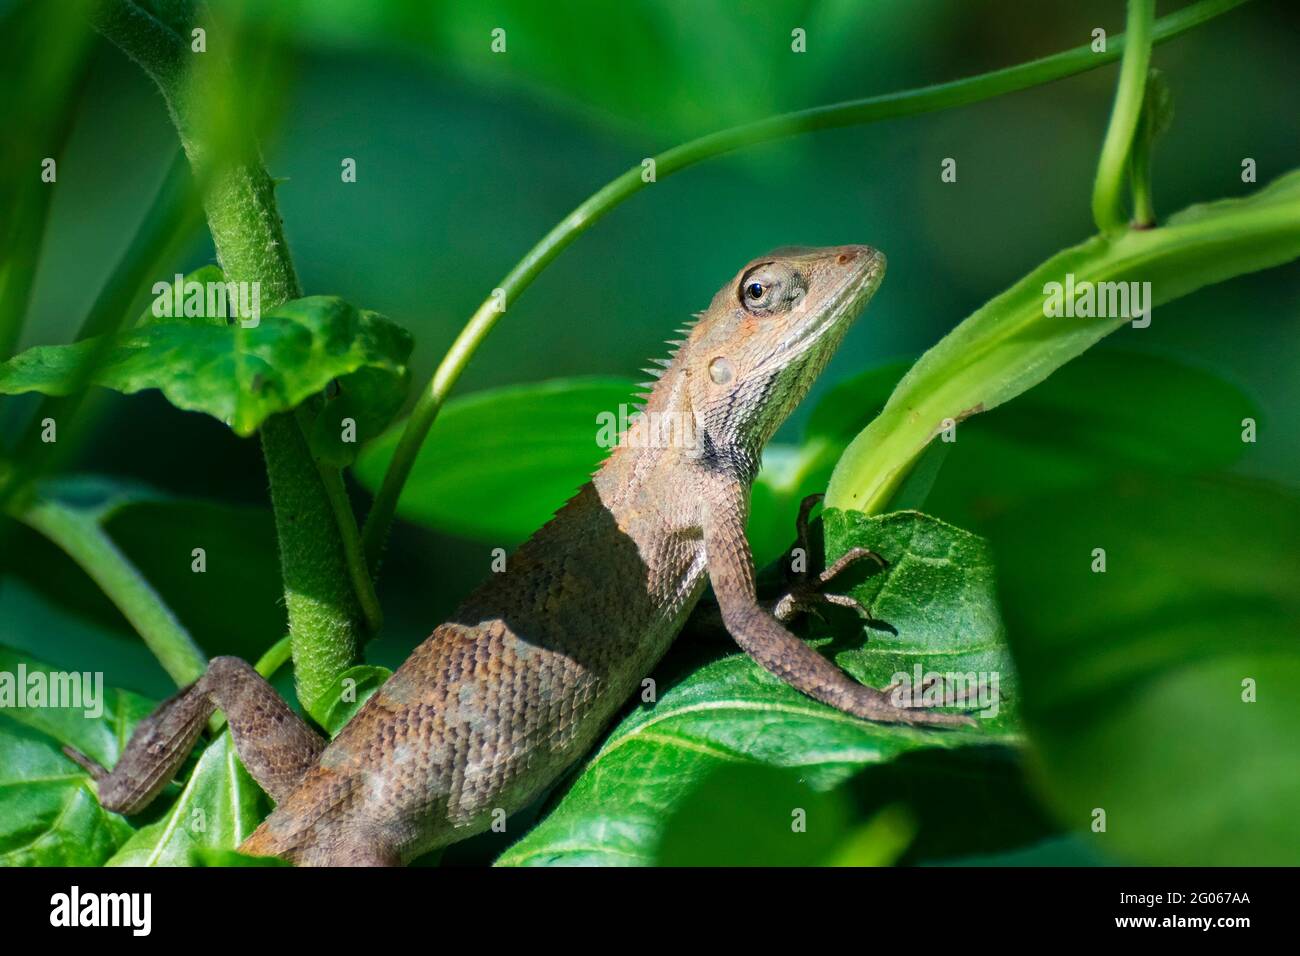 Beautiful Indian gecko inside a bush looking out ,  green foliage background, morning light , Kolkata, India - nature stock photograph Stock Photo